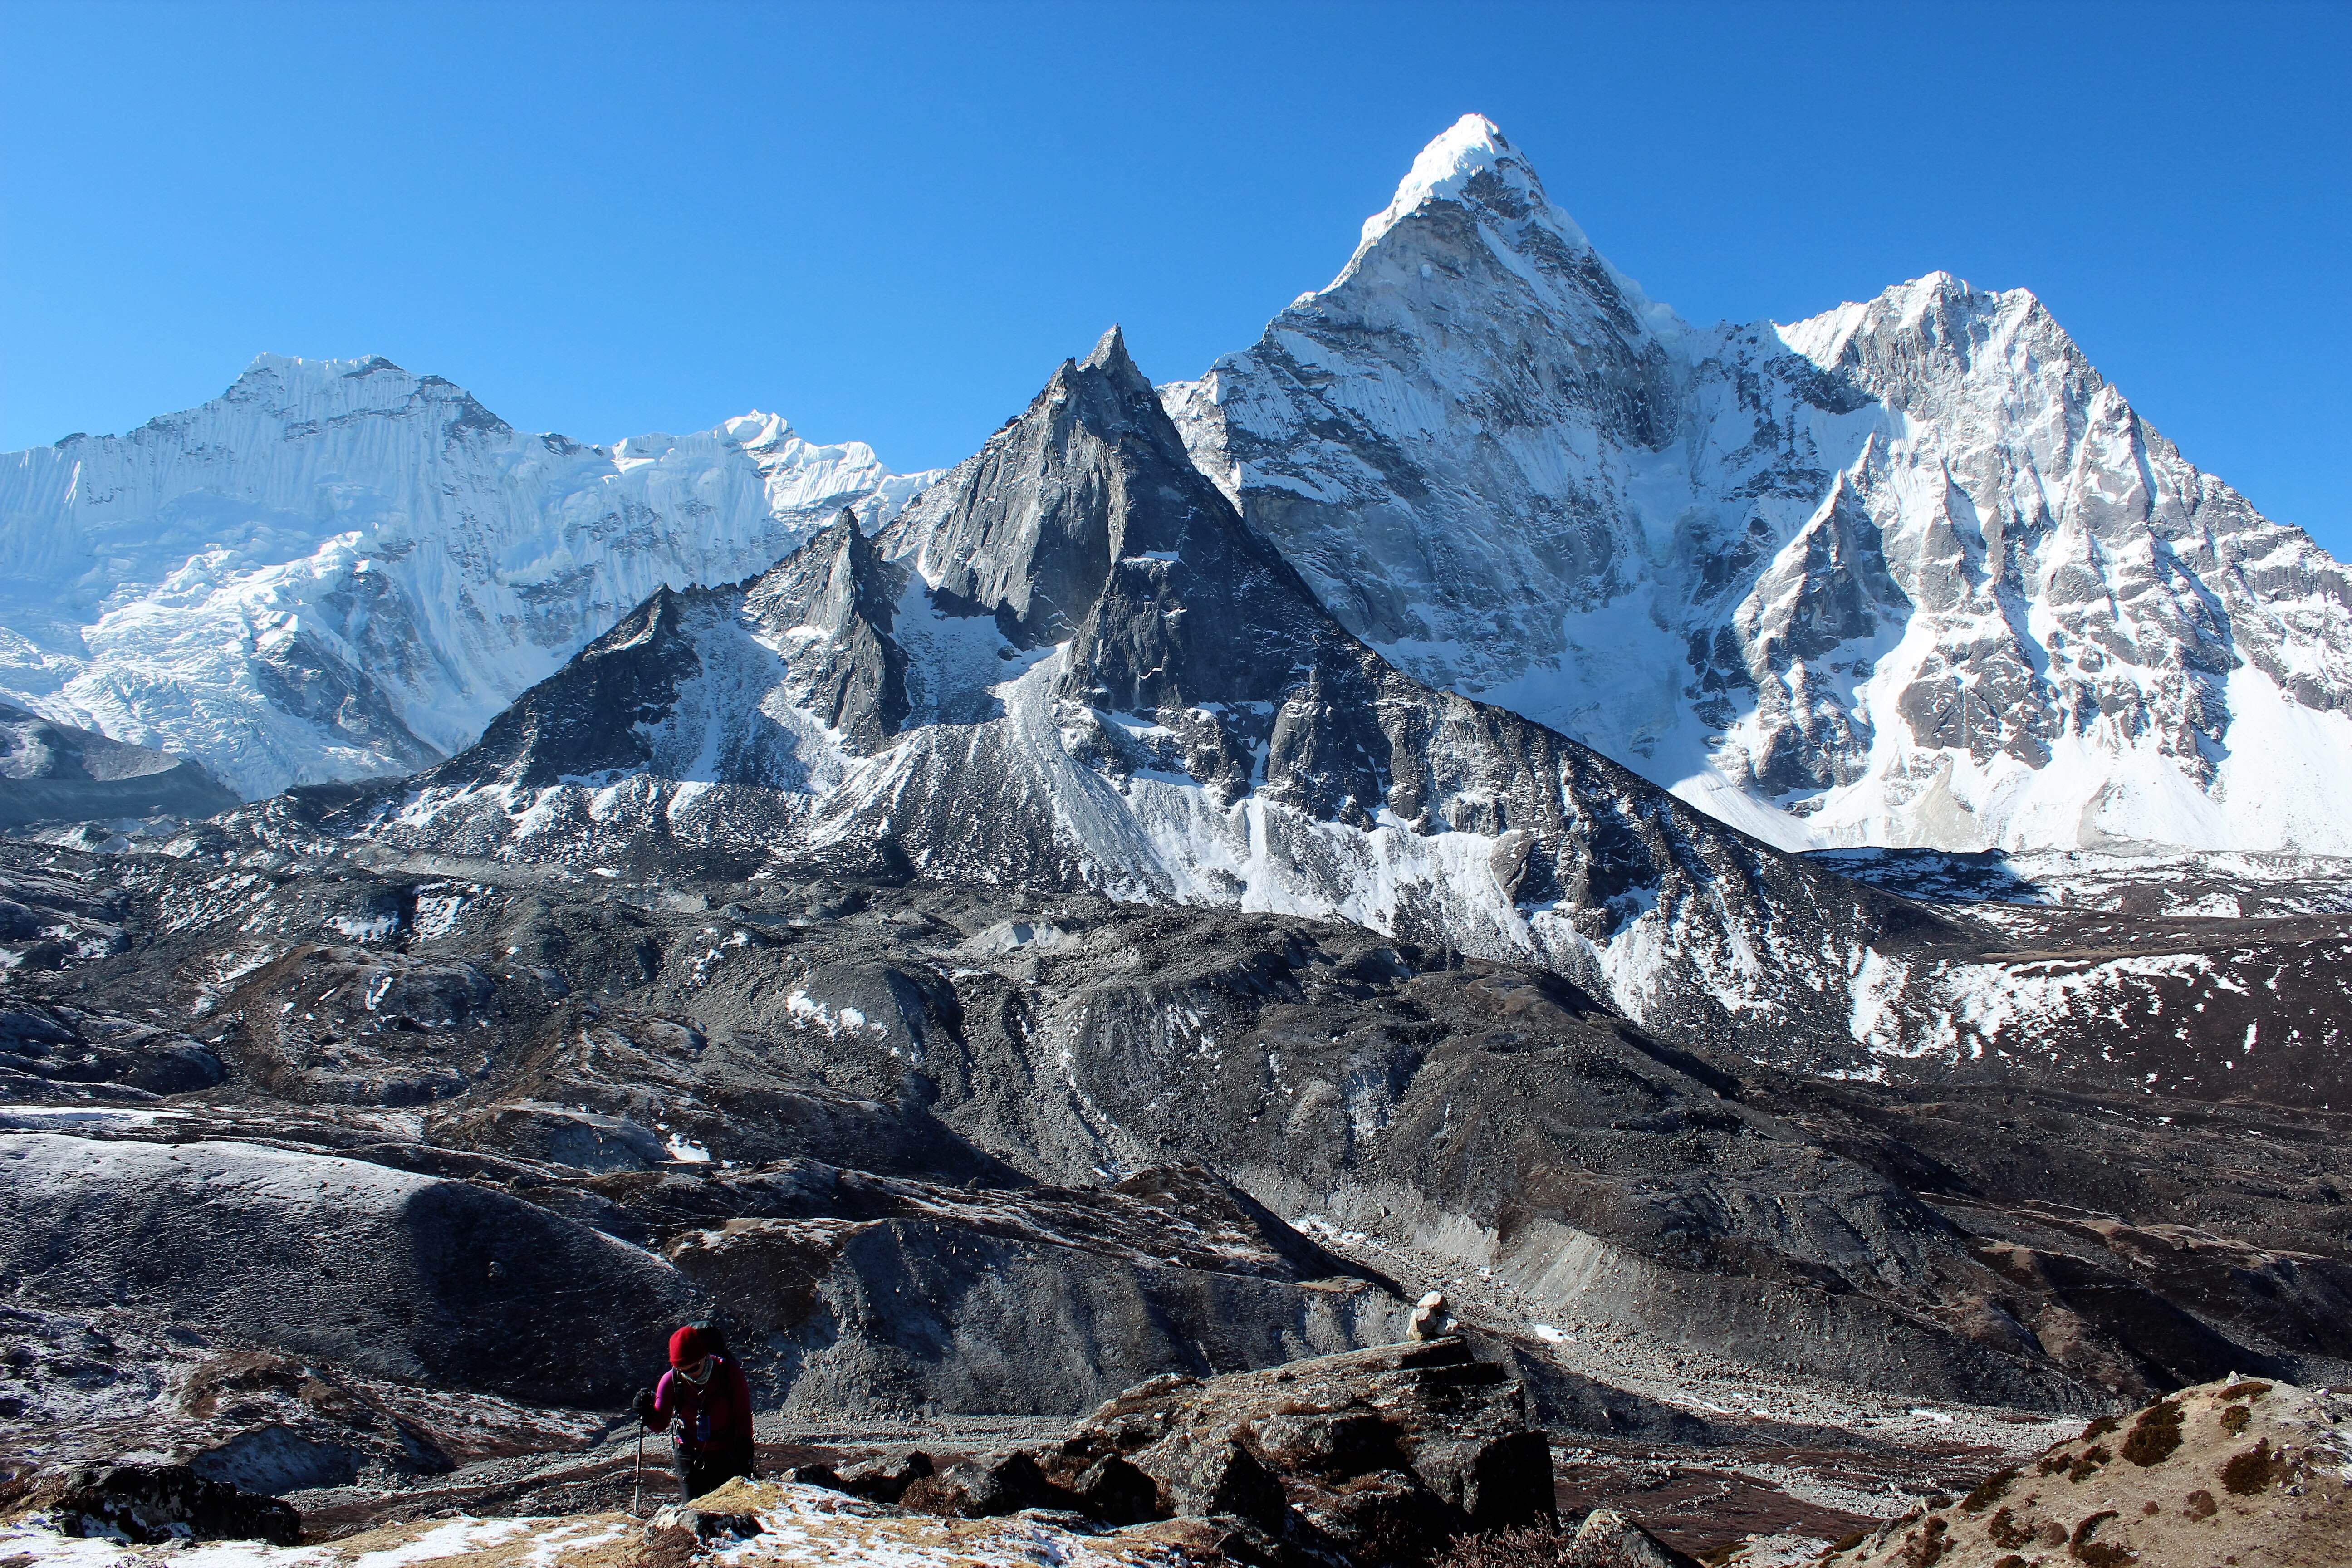 Ferð Til Nepal – Island Peak Og Everest Base Camp